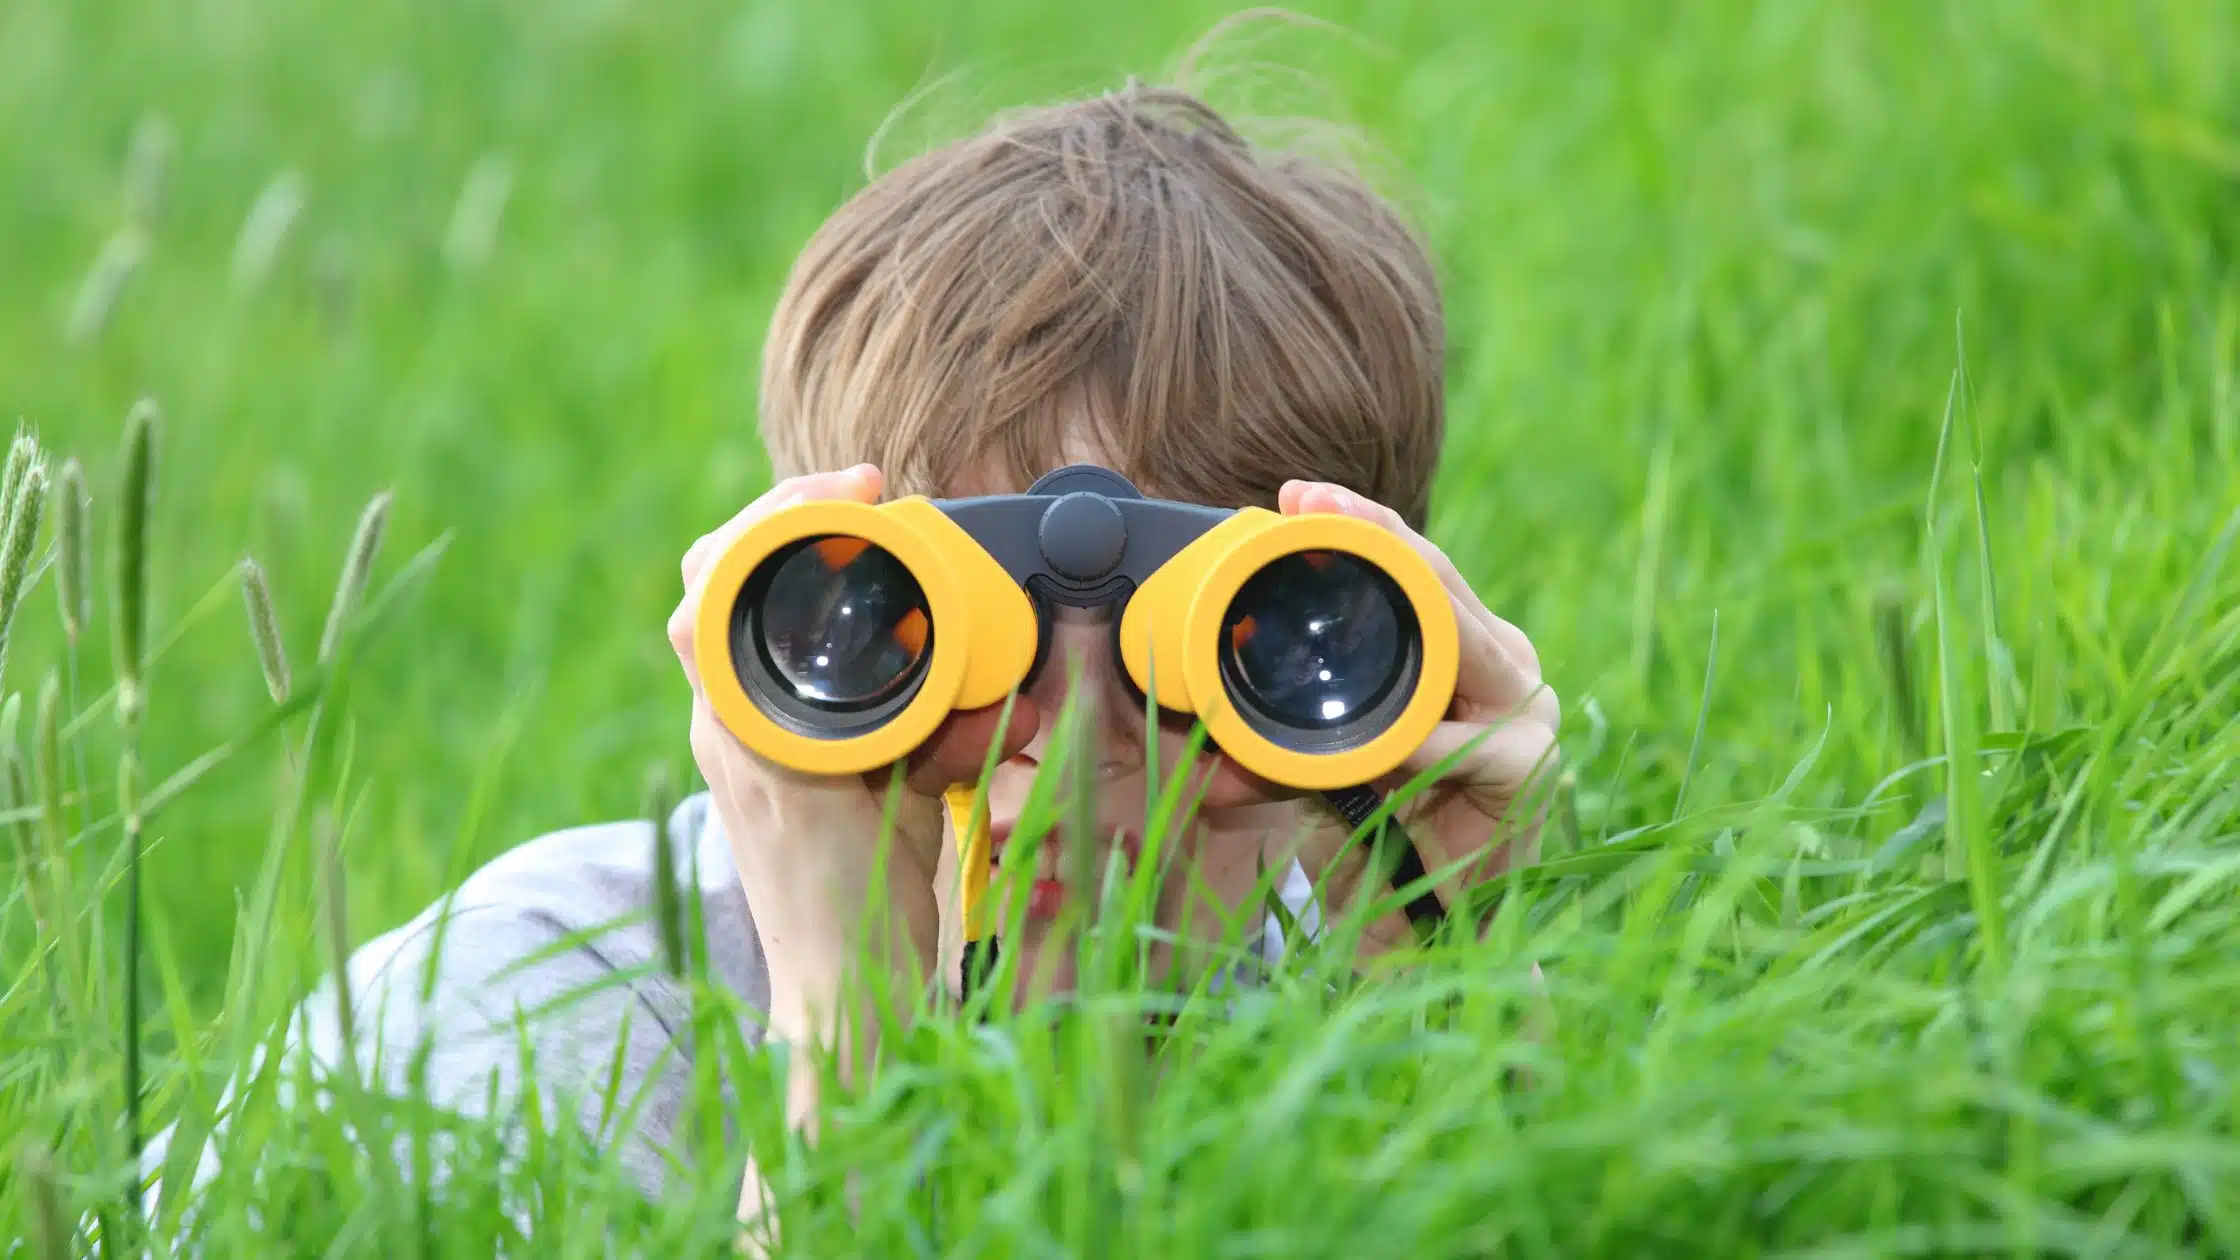 Little boy spying through binoculars